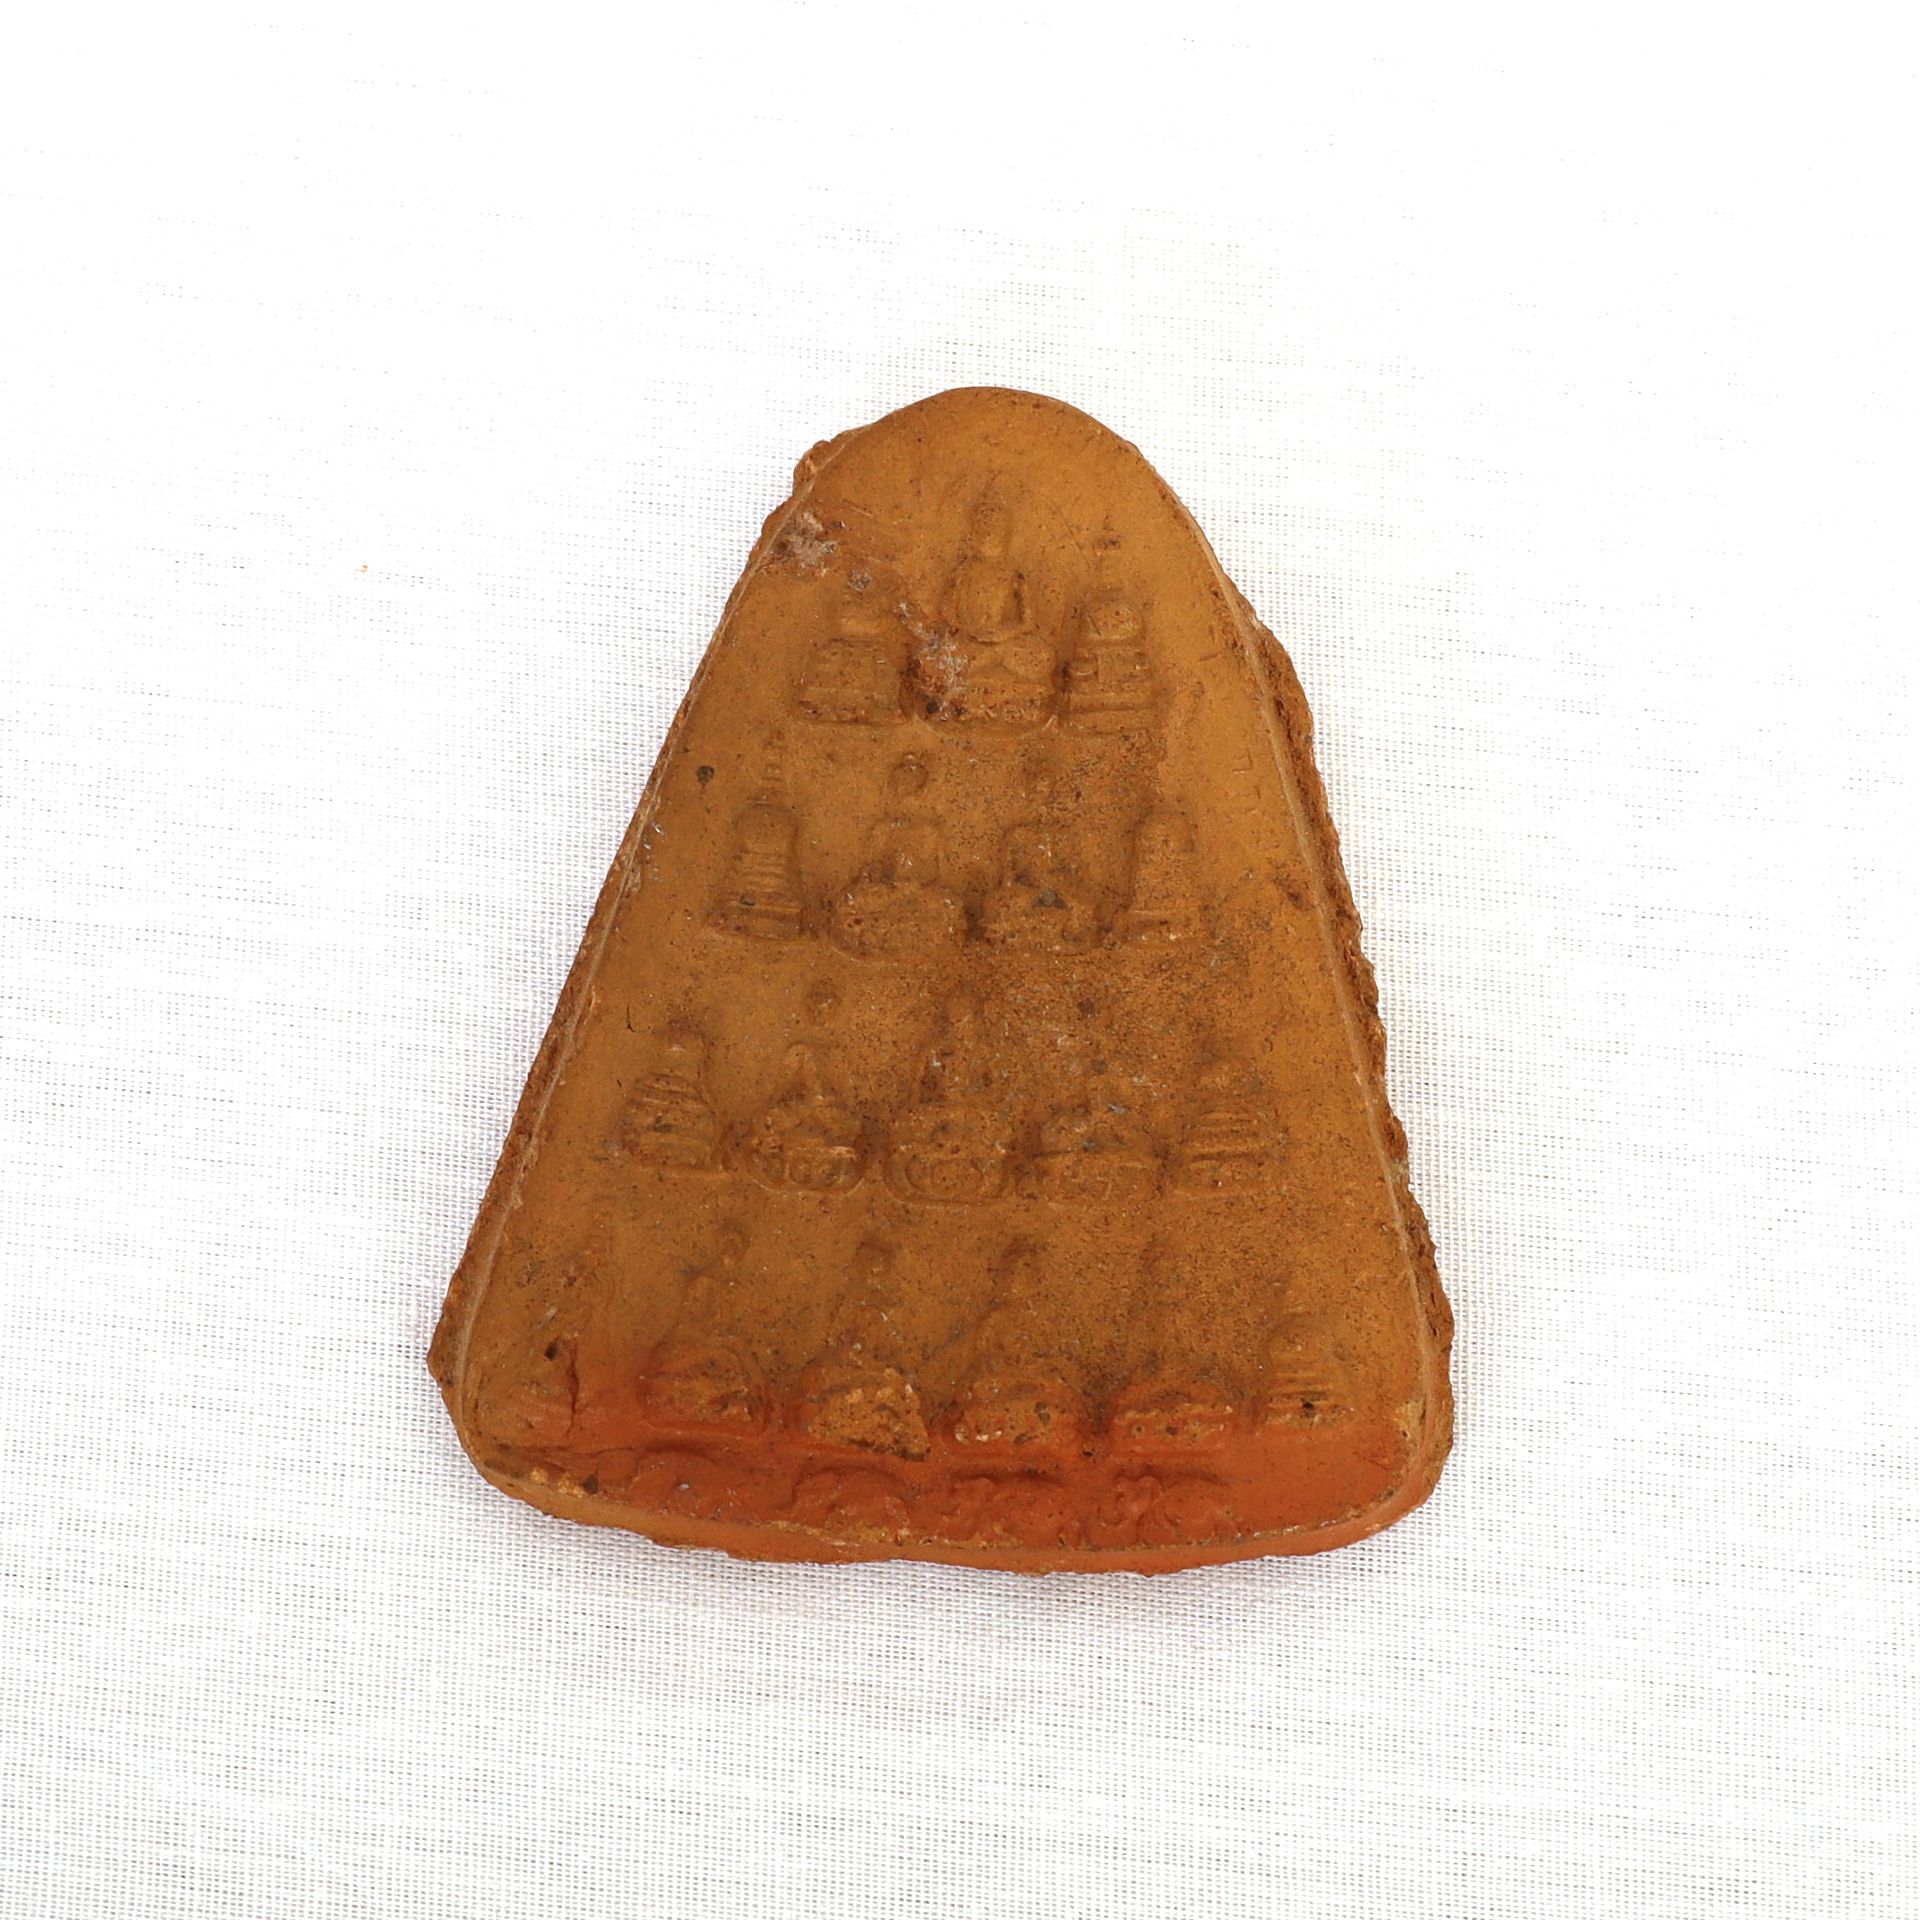 Null 小三角形盘子，上面有10个菩萨和8个佛像，共4行。

陶器，20世纪

8 x 8 x 6.5厘米